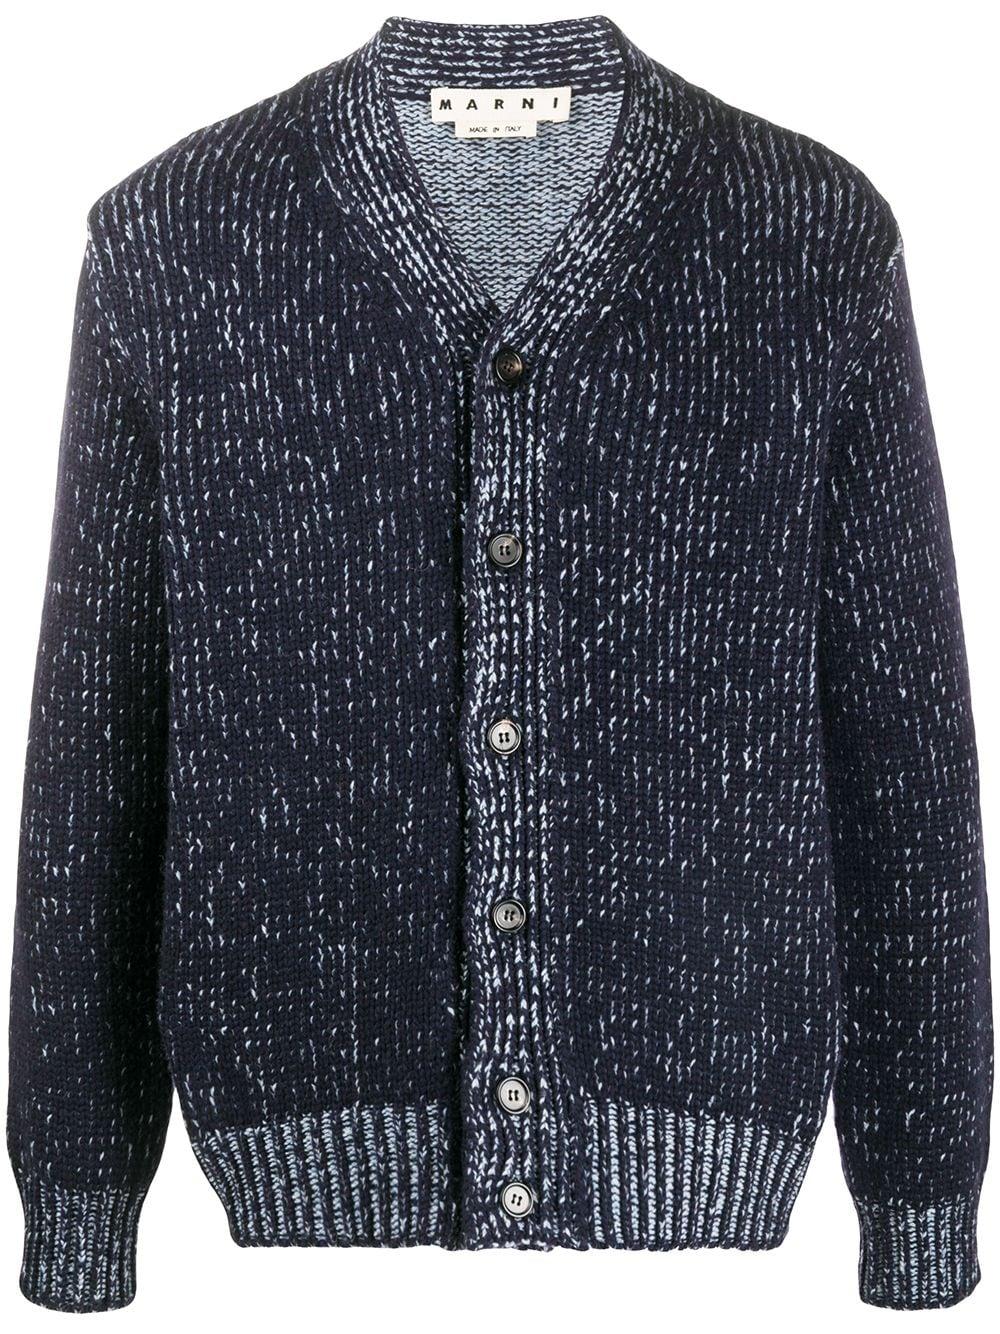 Marni Wool Marled Knit Cardigan in Blue for Men - Lyst